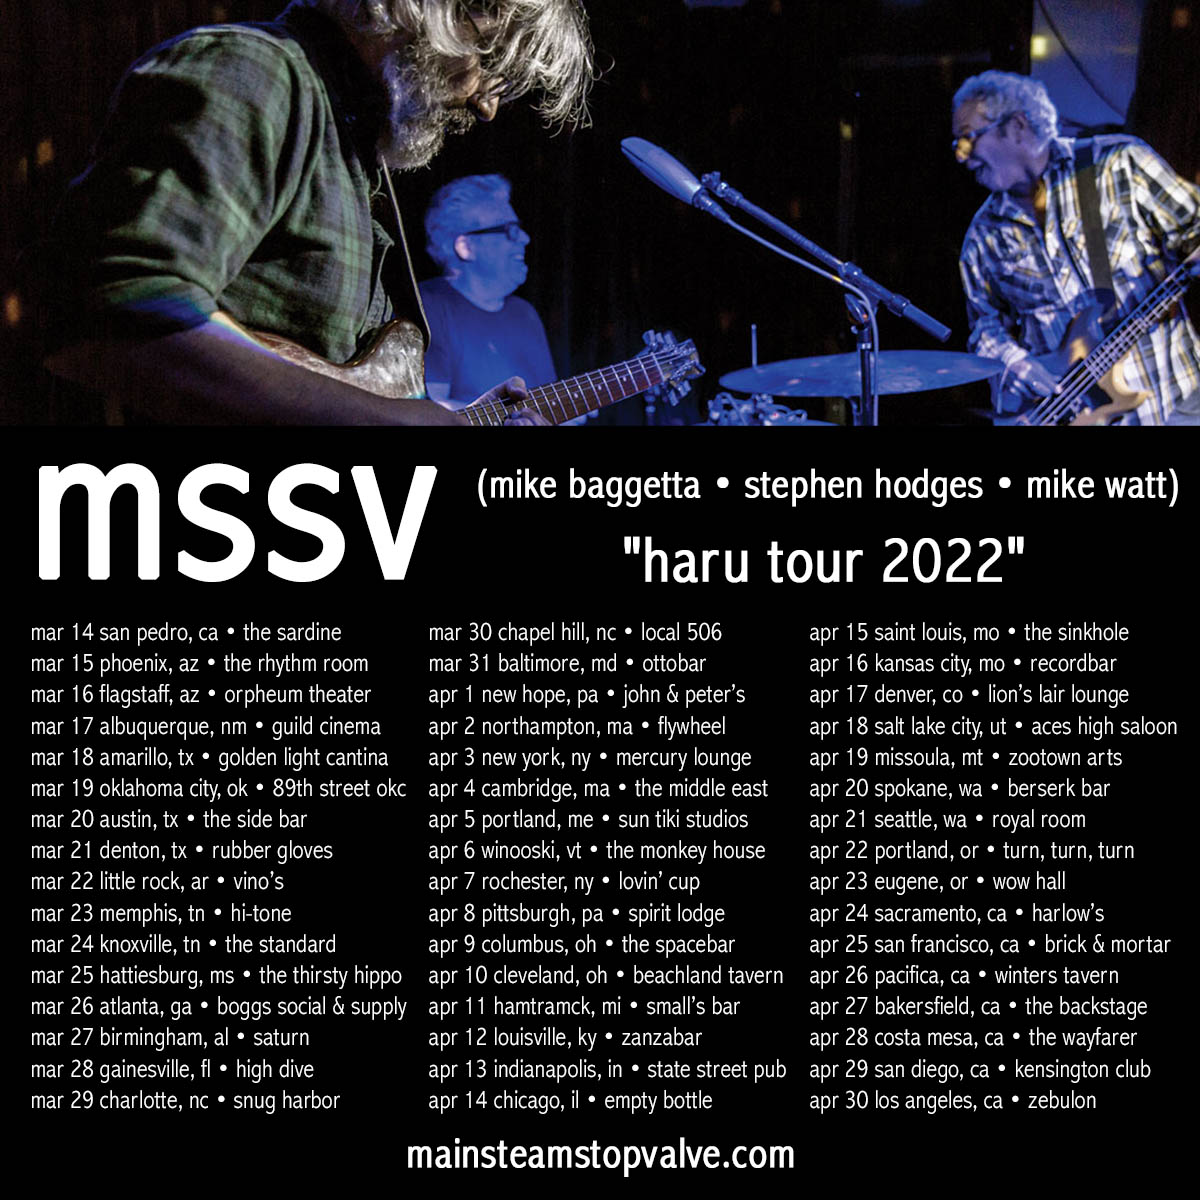 mssv 'haru tour 2022' dates